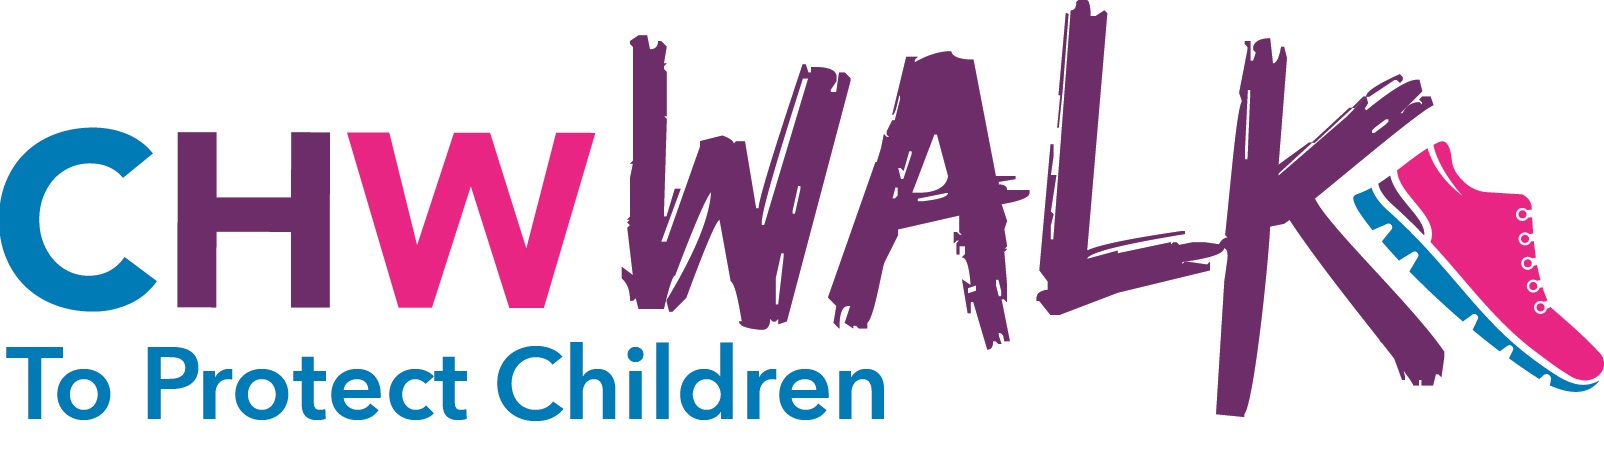 CHWWALK logo_without In Memory.jpg